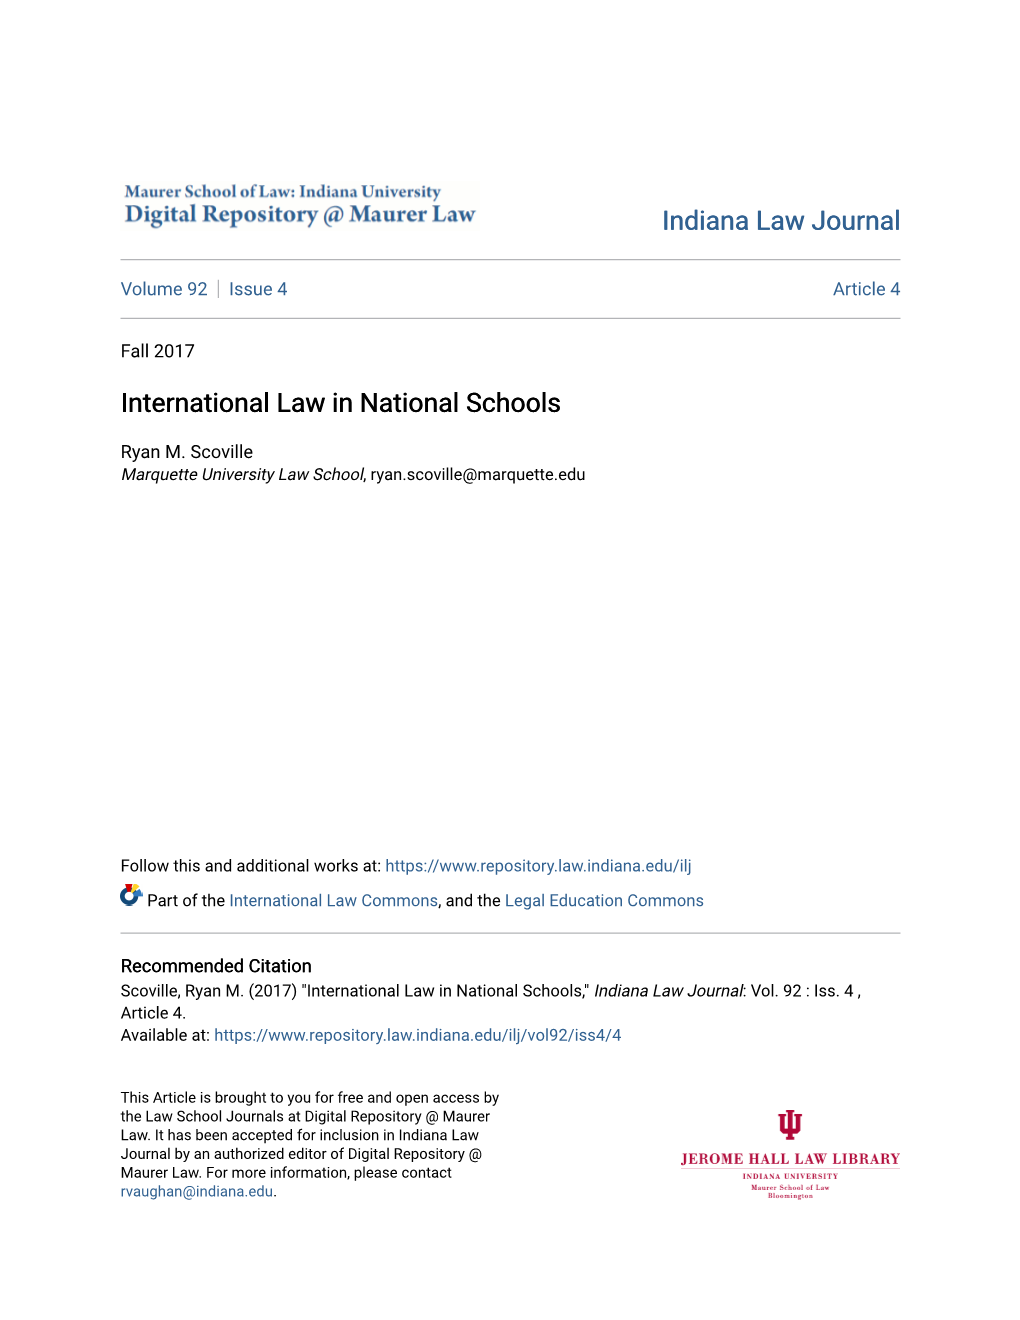 International Law in National Schools